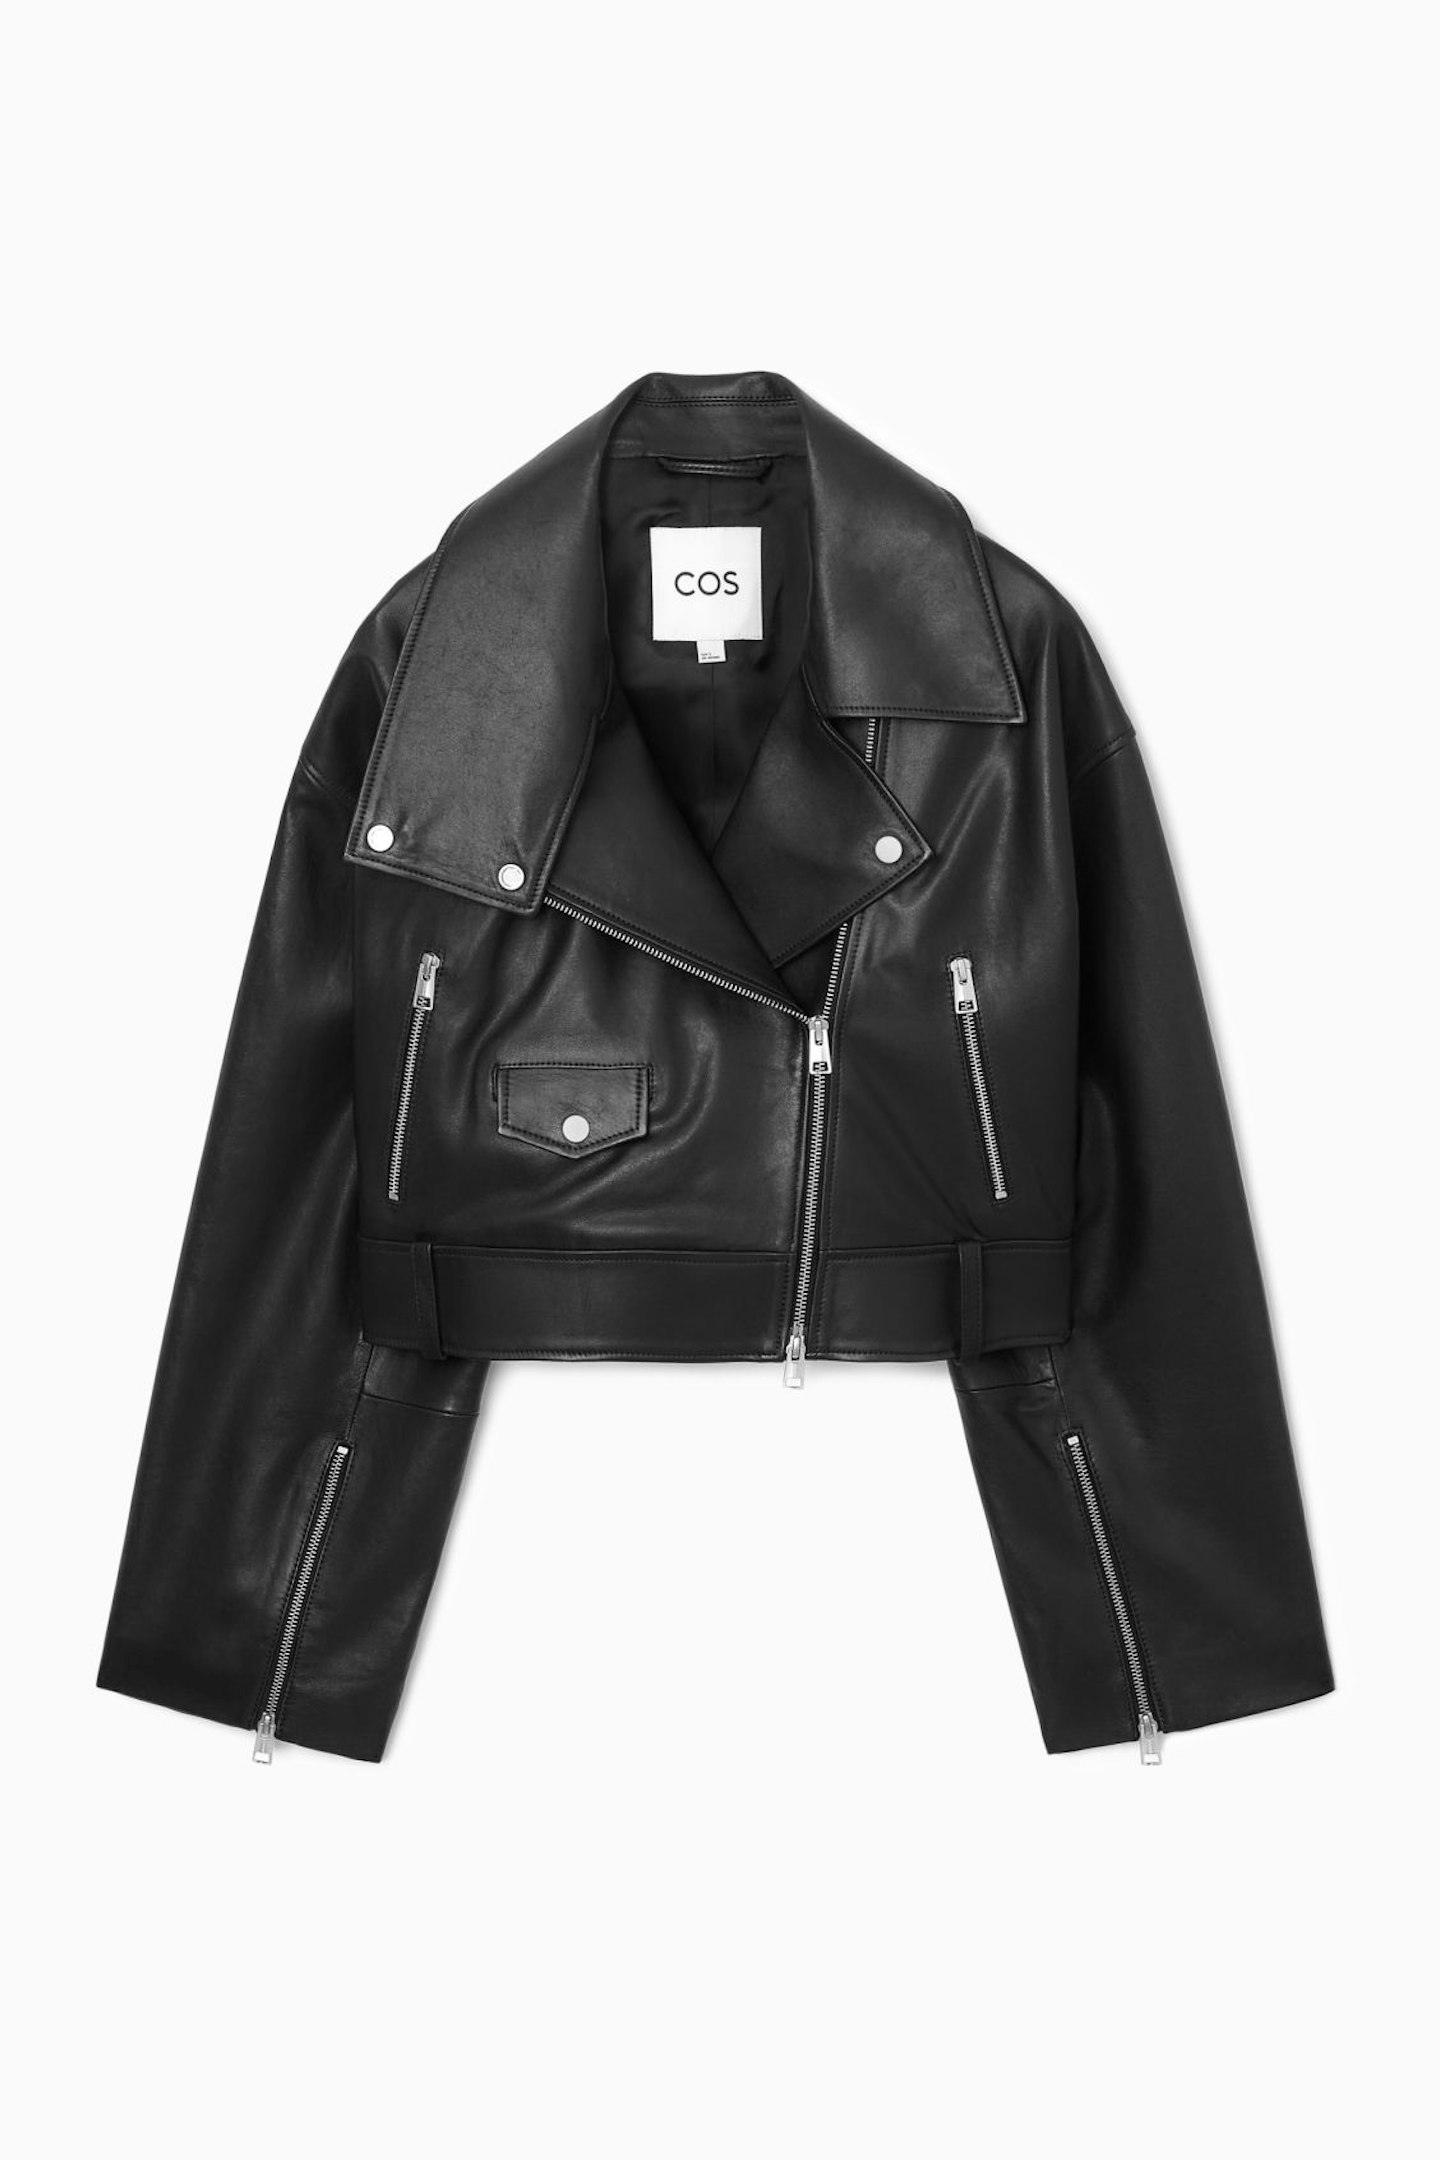 COS, Oversized Crop Leather Biker Jacket